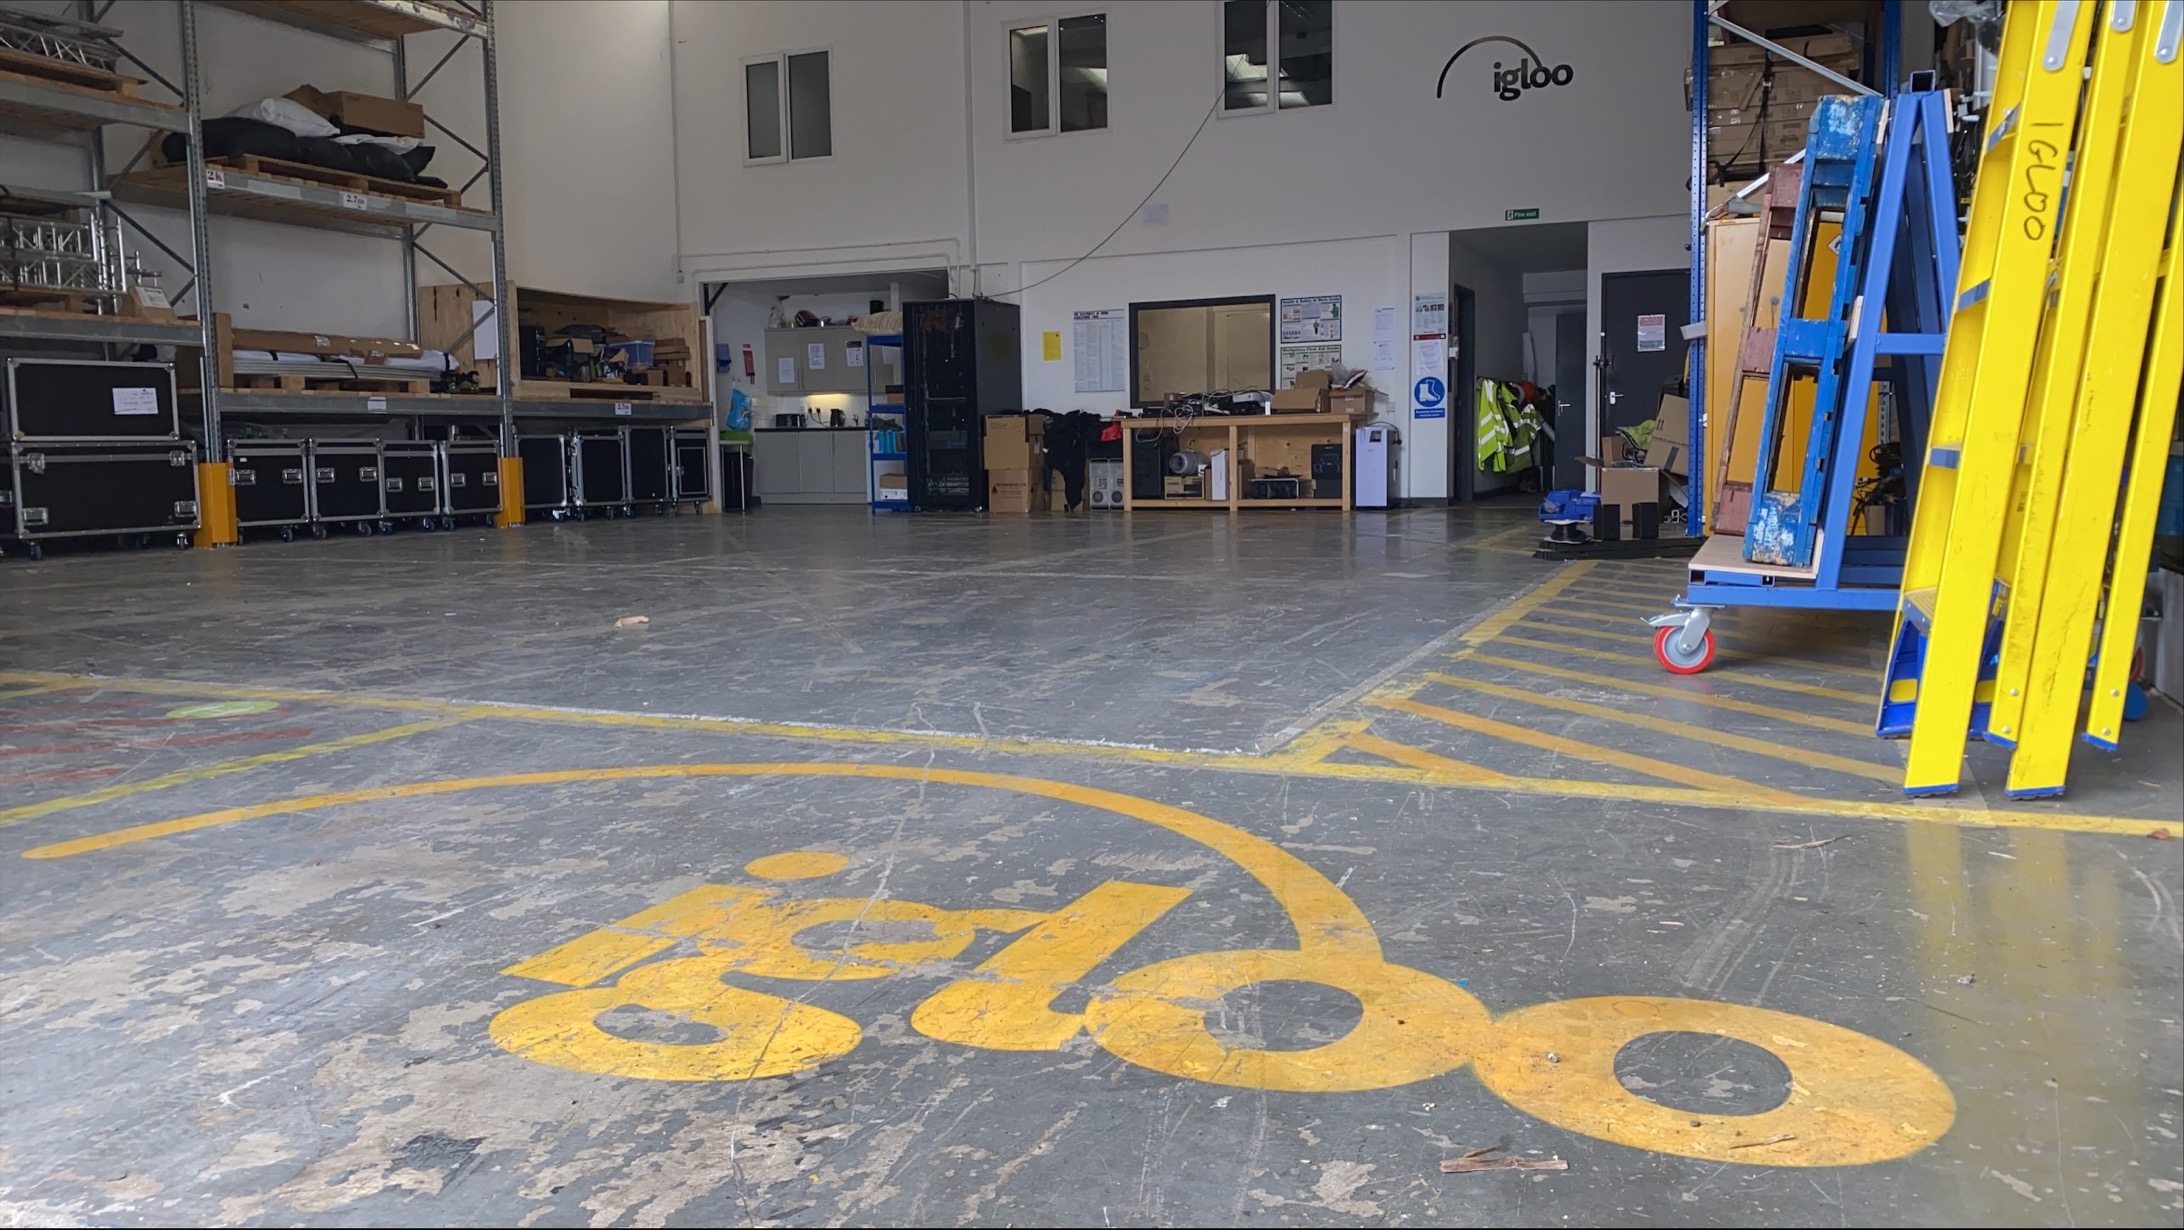 Igloo empty warehouse space with logo on floor.